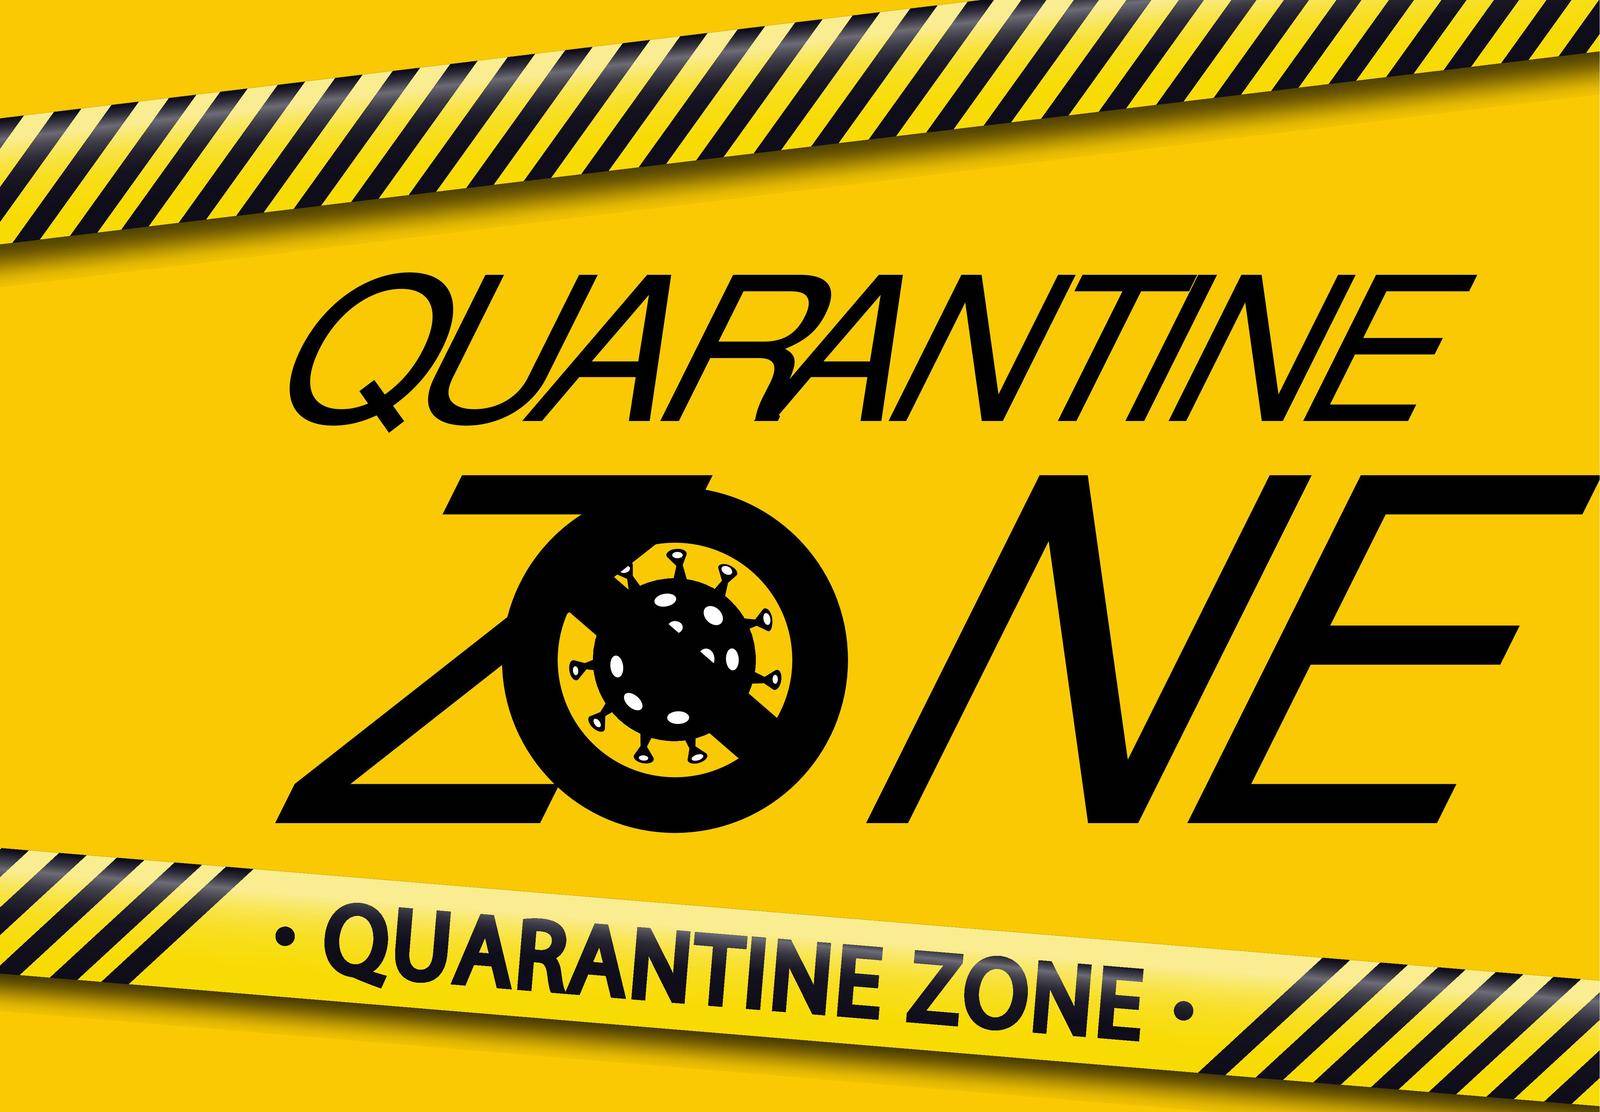 Quarantine Zone.Covid-19. Coronavirus. by ku4erashka